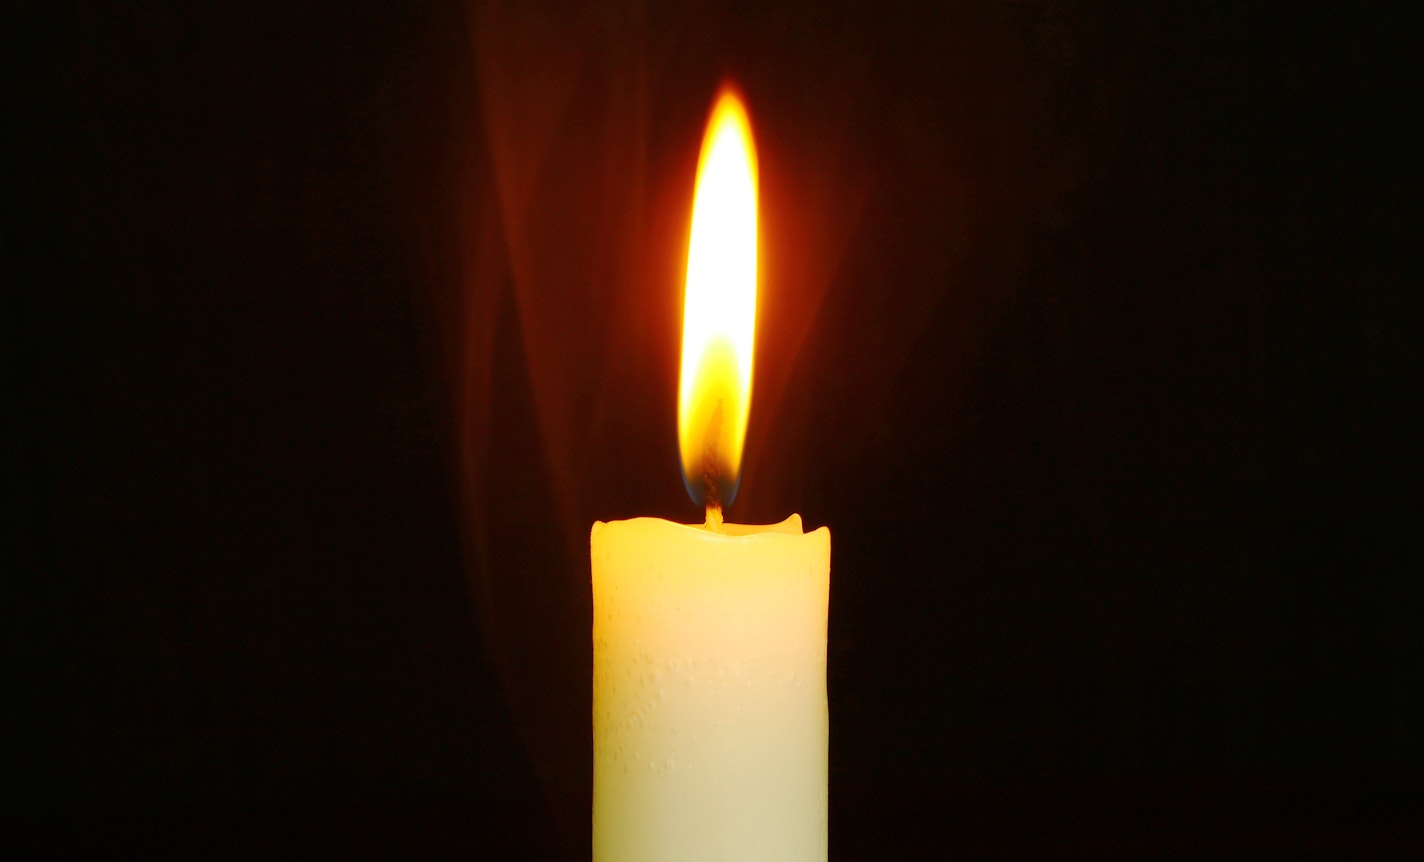 Mourning into Unity Online Candlelight Vigil